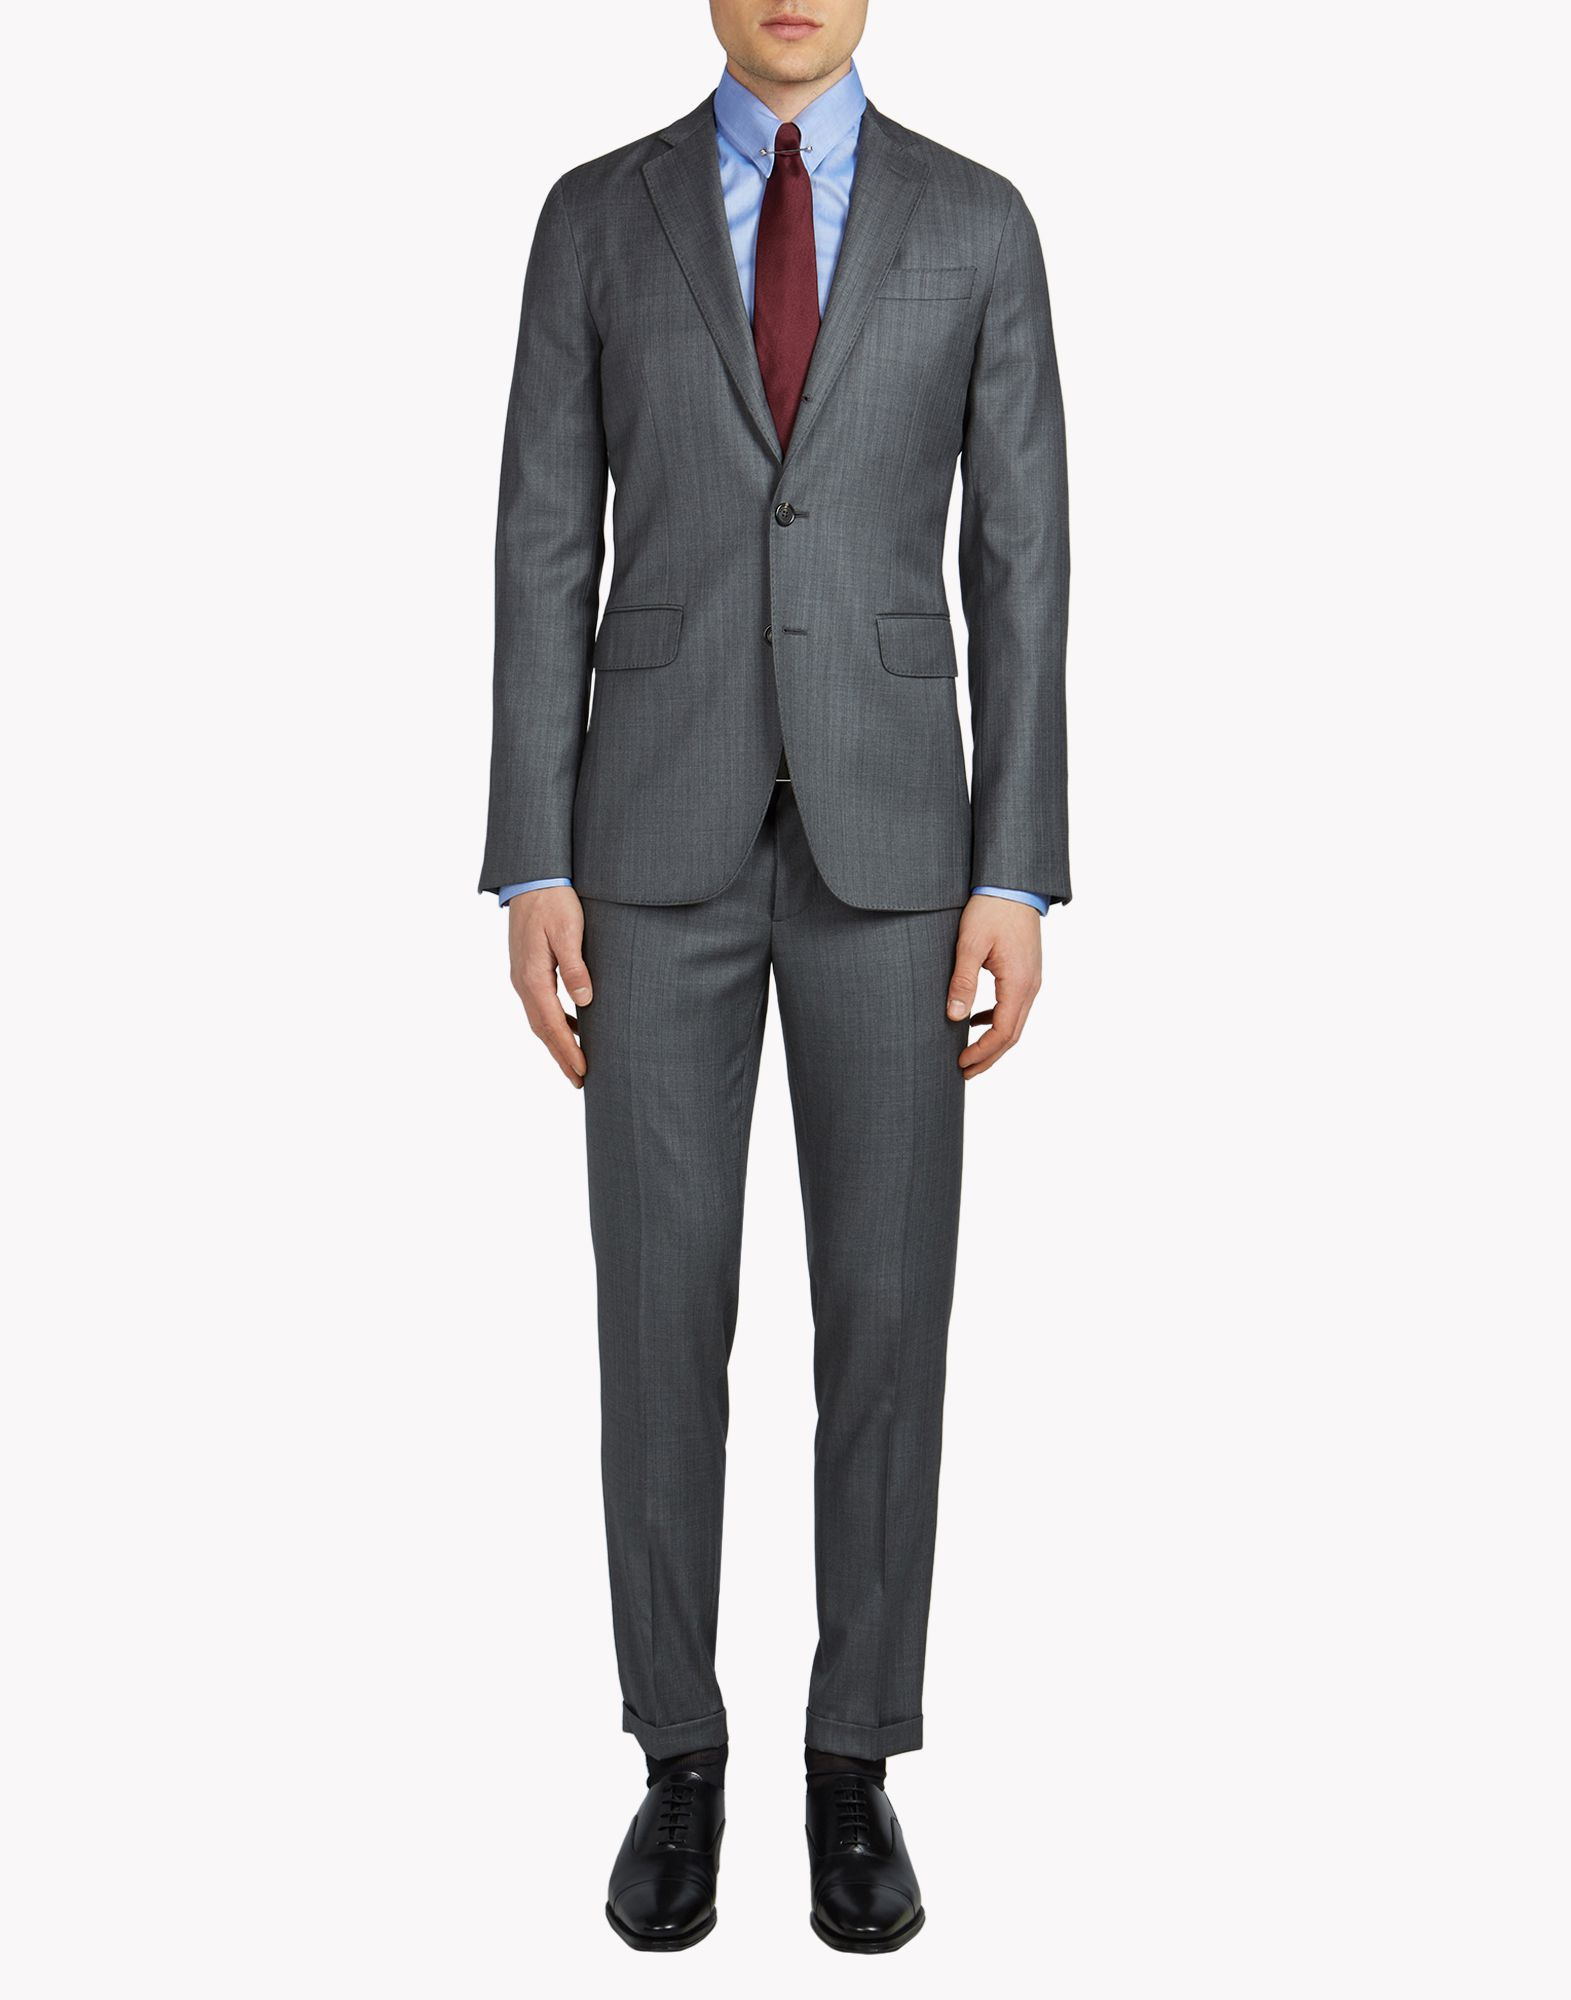 Lyst - Dsquared² Capri Suit in Gray for Men